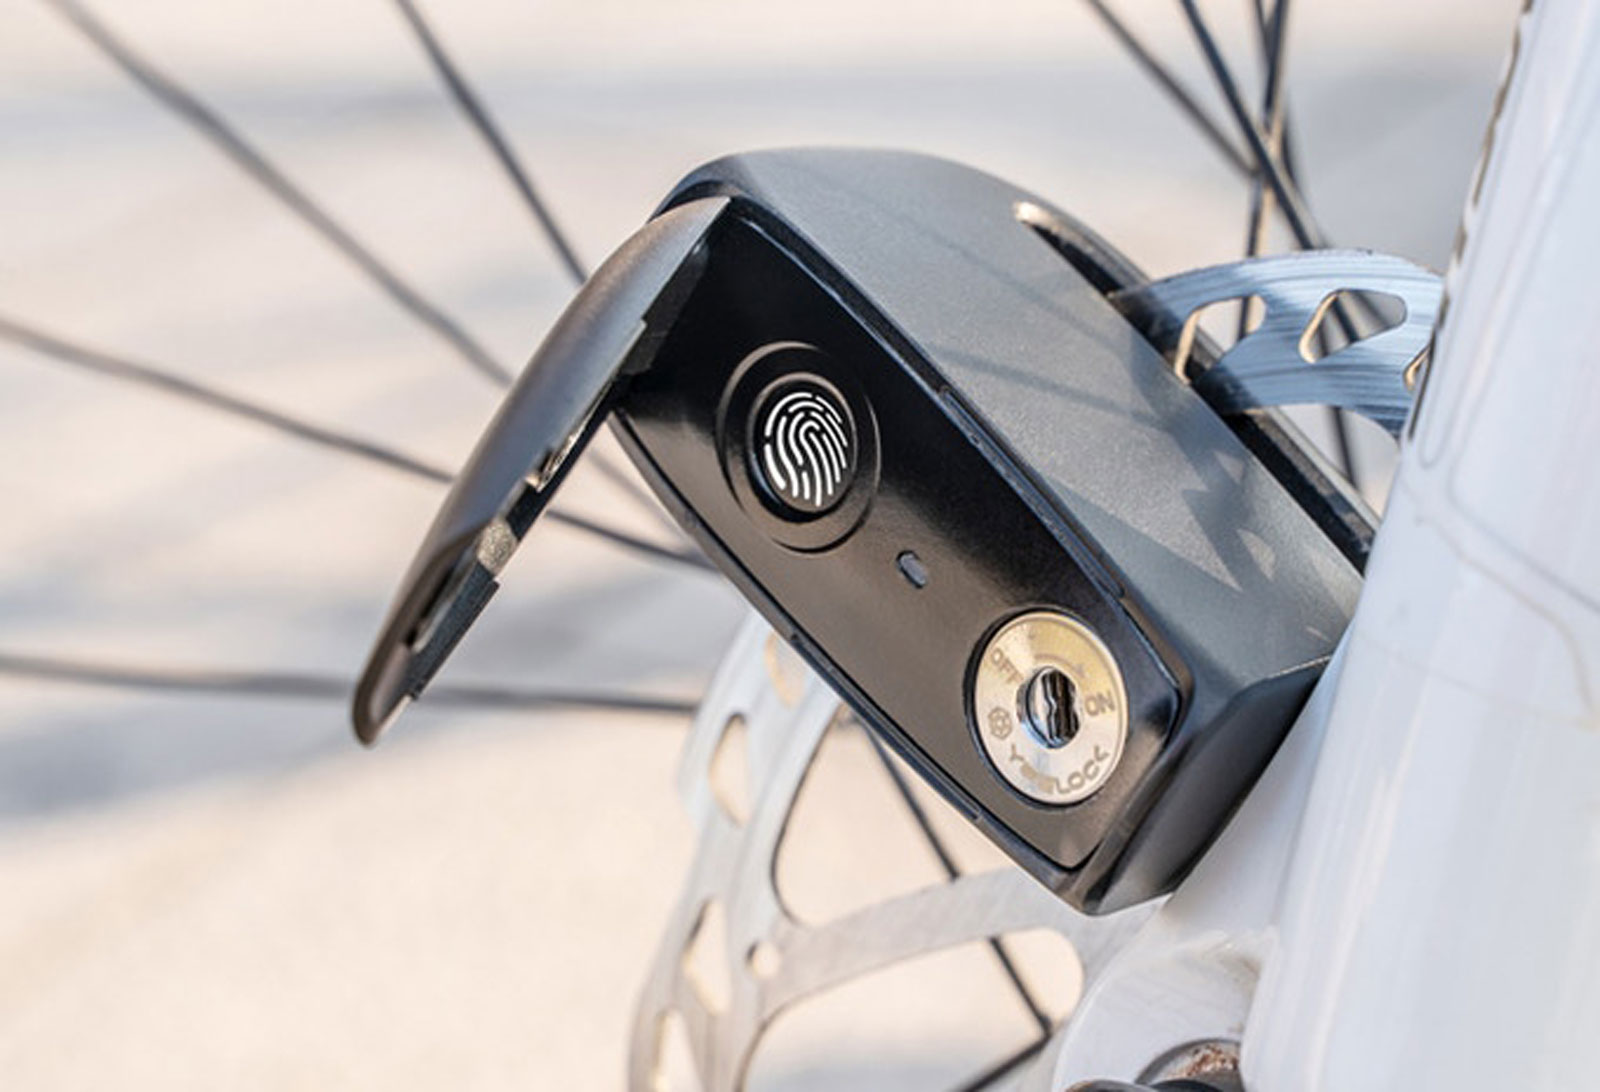 yeelock fingerprint disc brake lock bicycles